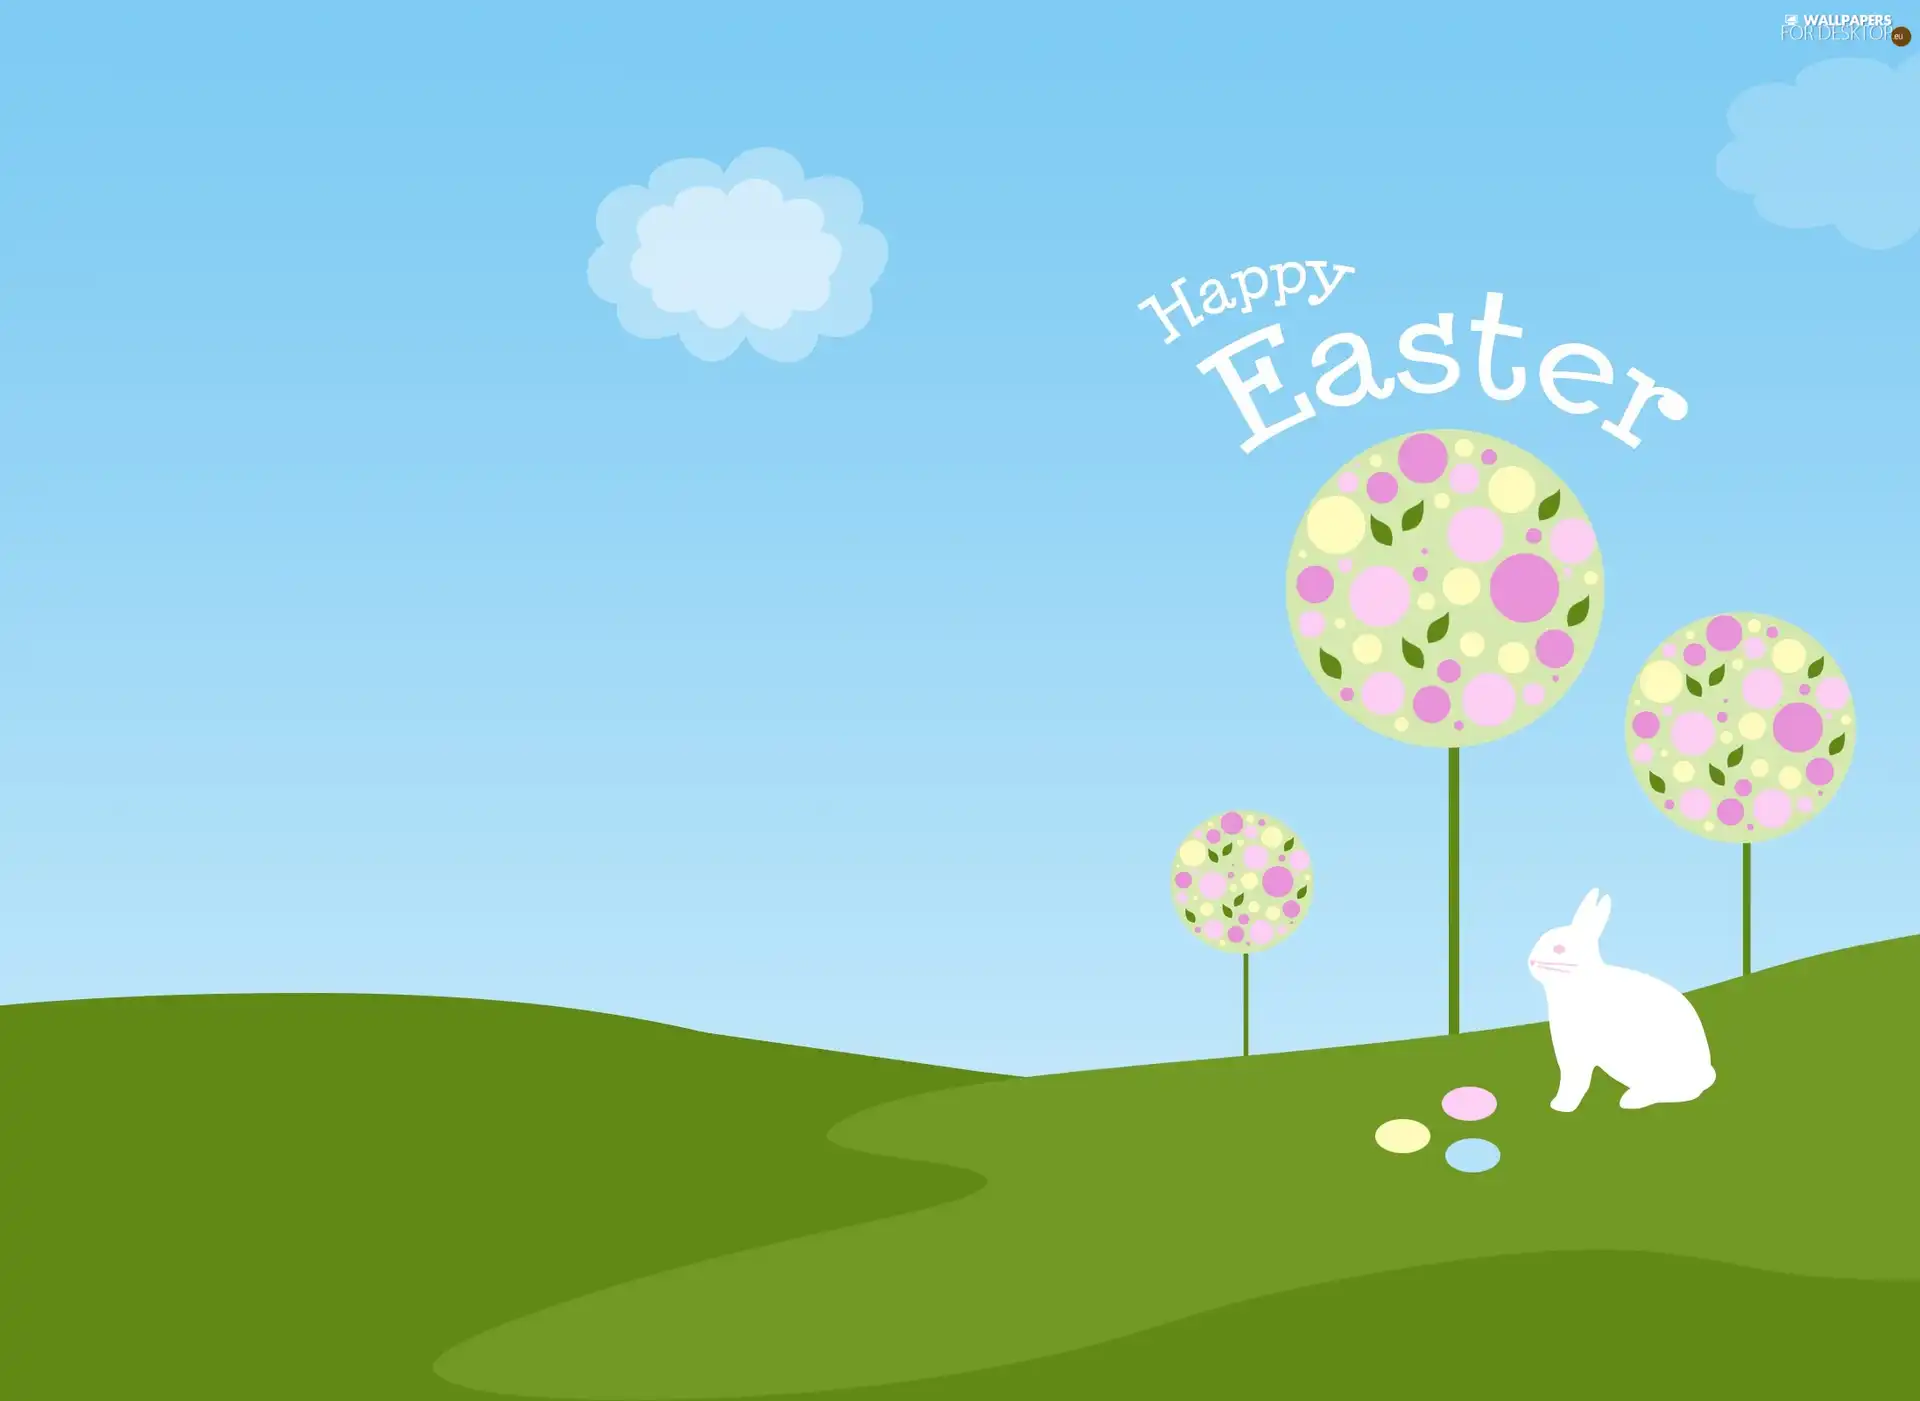 Easter, Green, meadow, rabbit